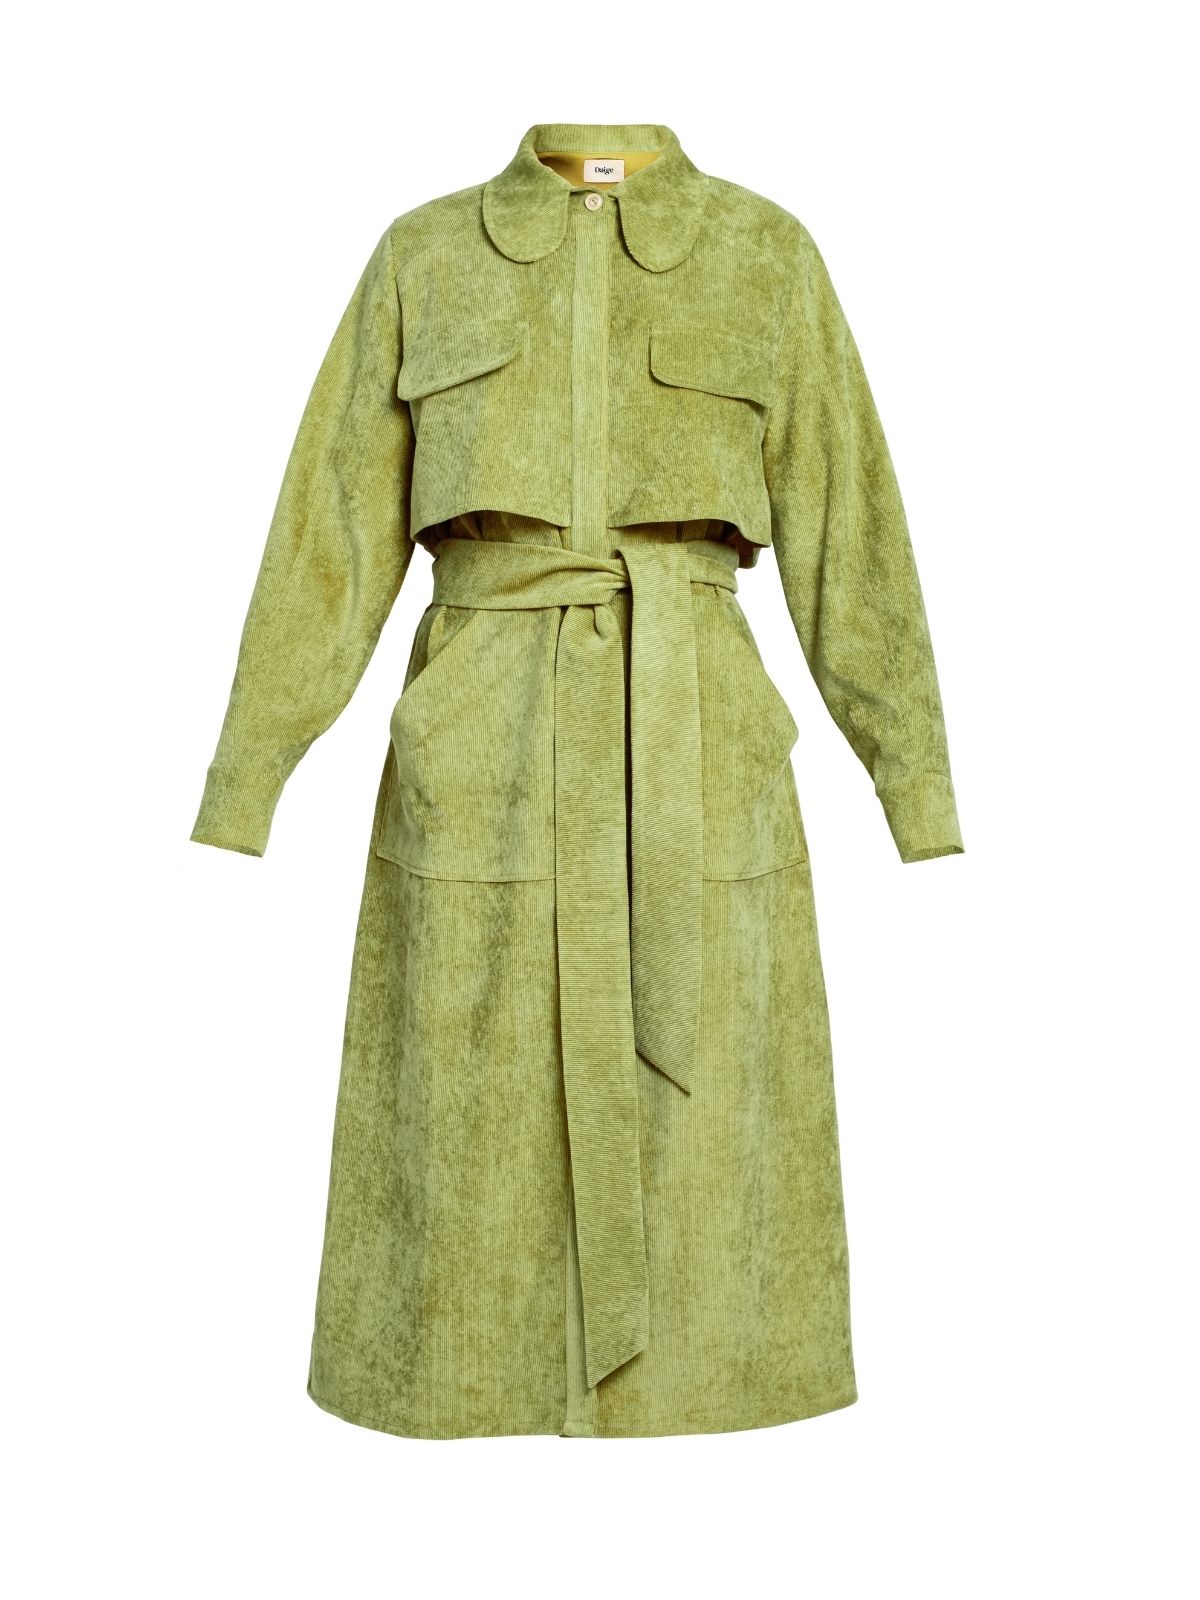 VELA coat dress - micro cord, olive